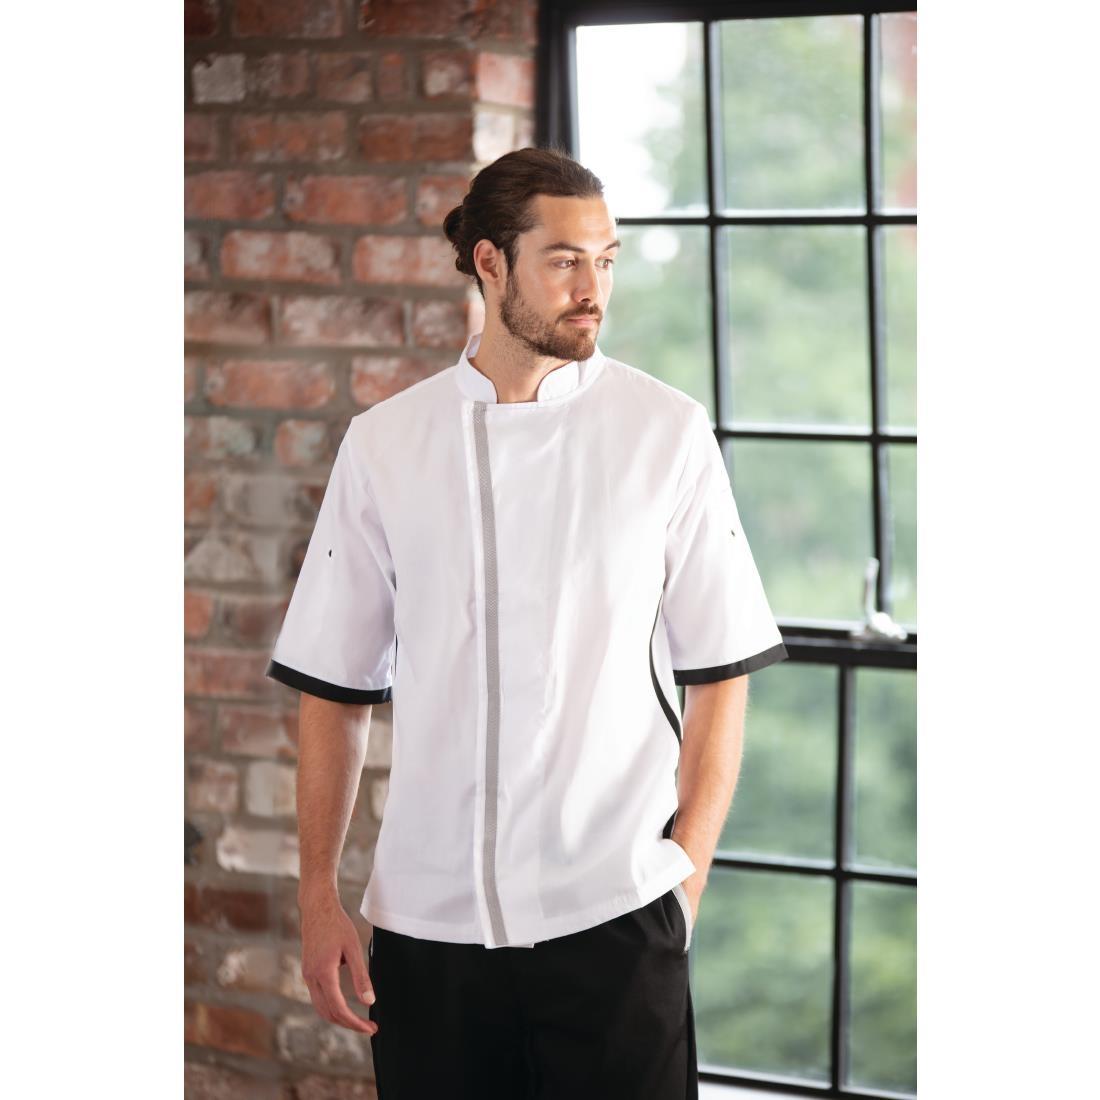 Southside Unisex Chefs Jacket Short Sleeve White XL - B998-XL  - 14